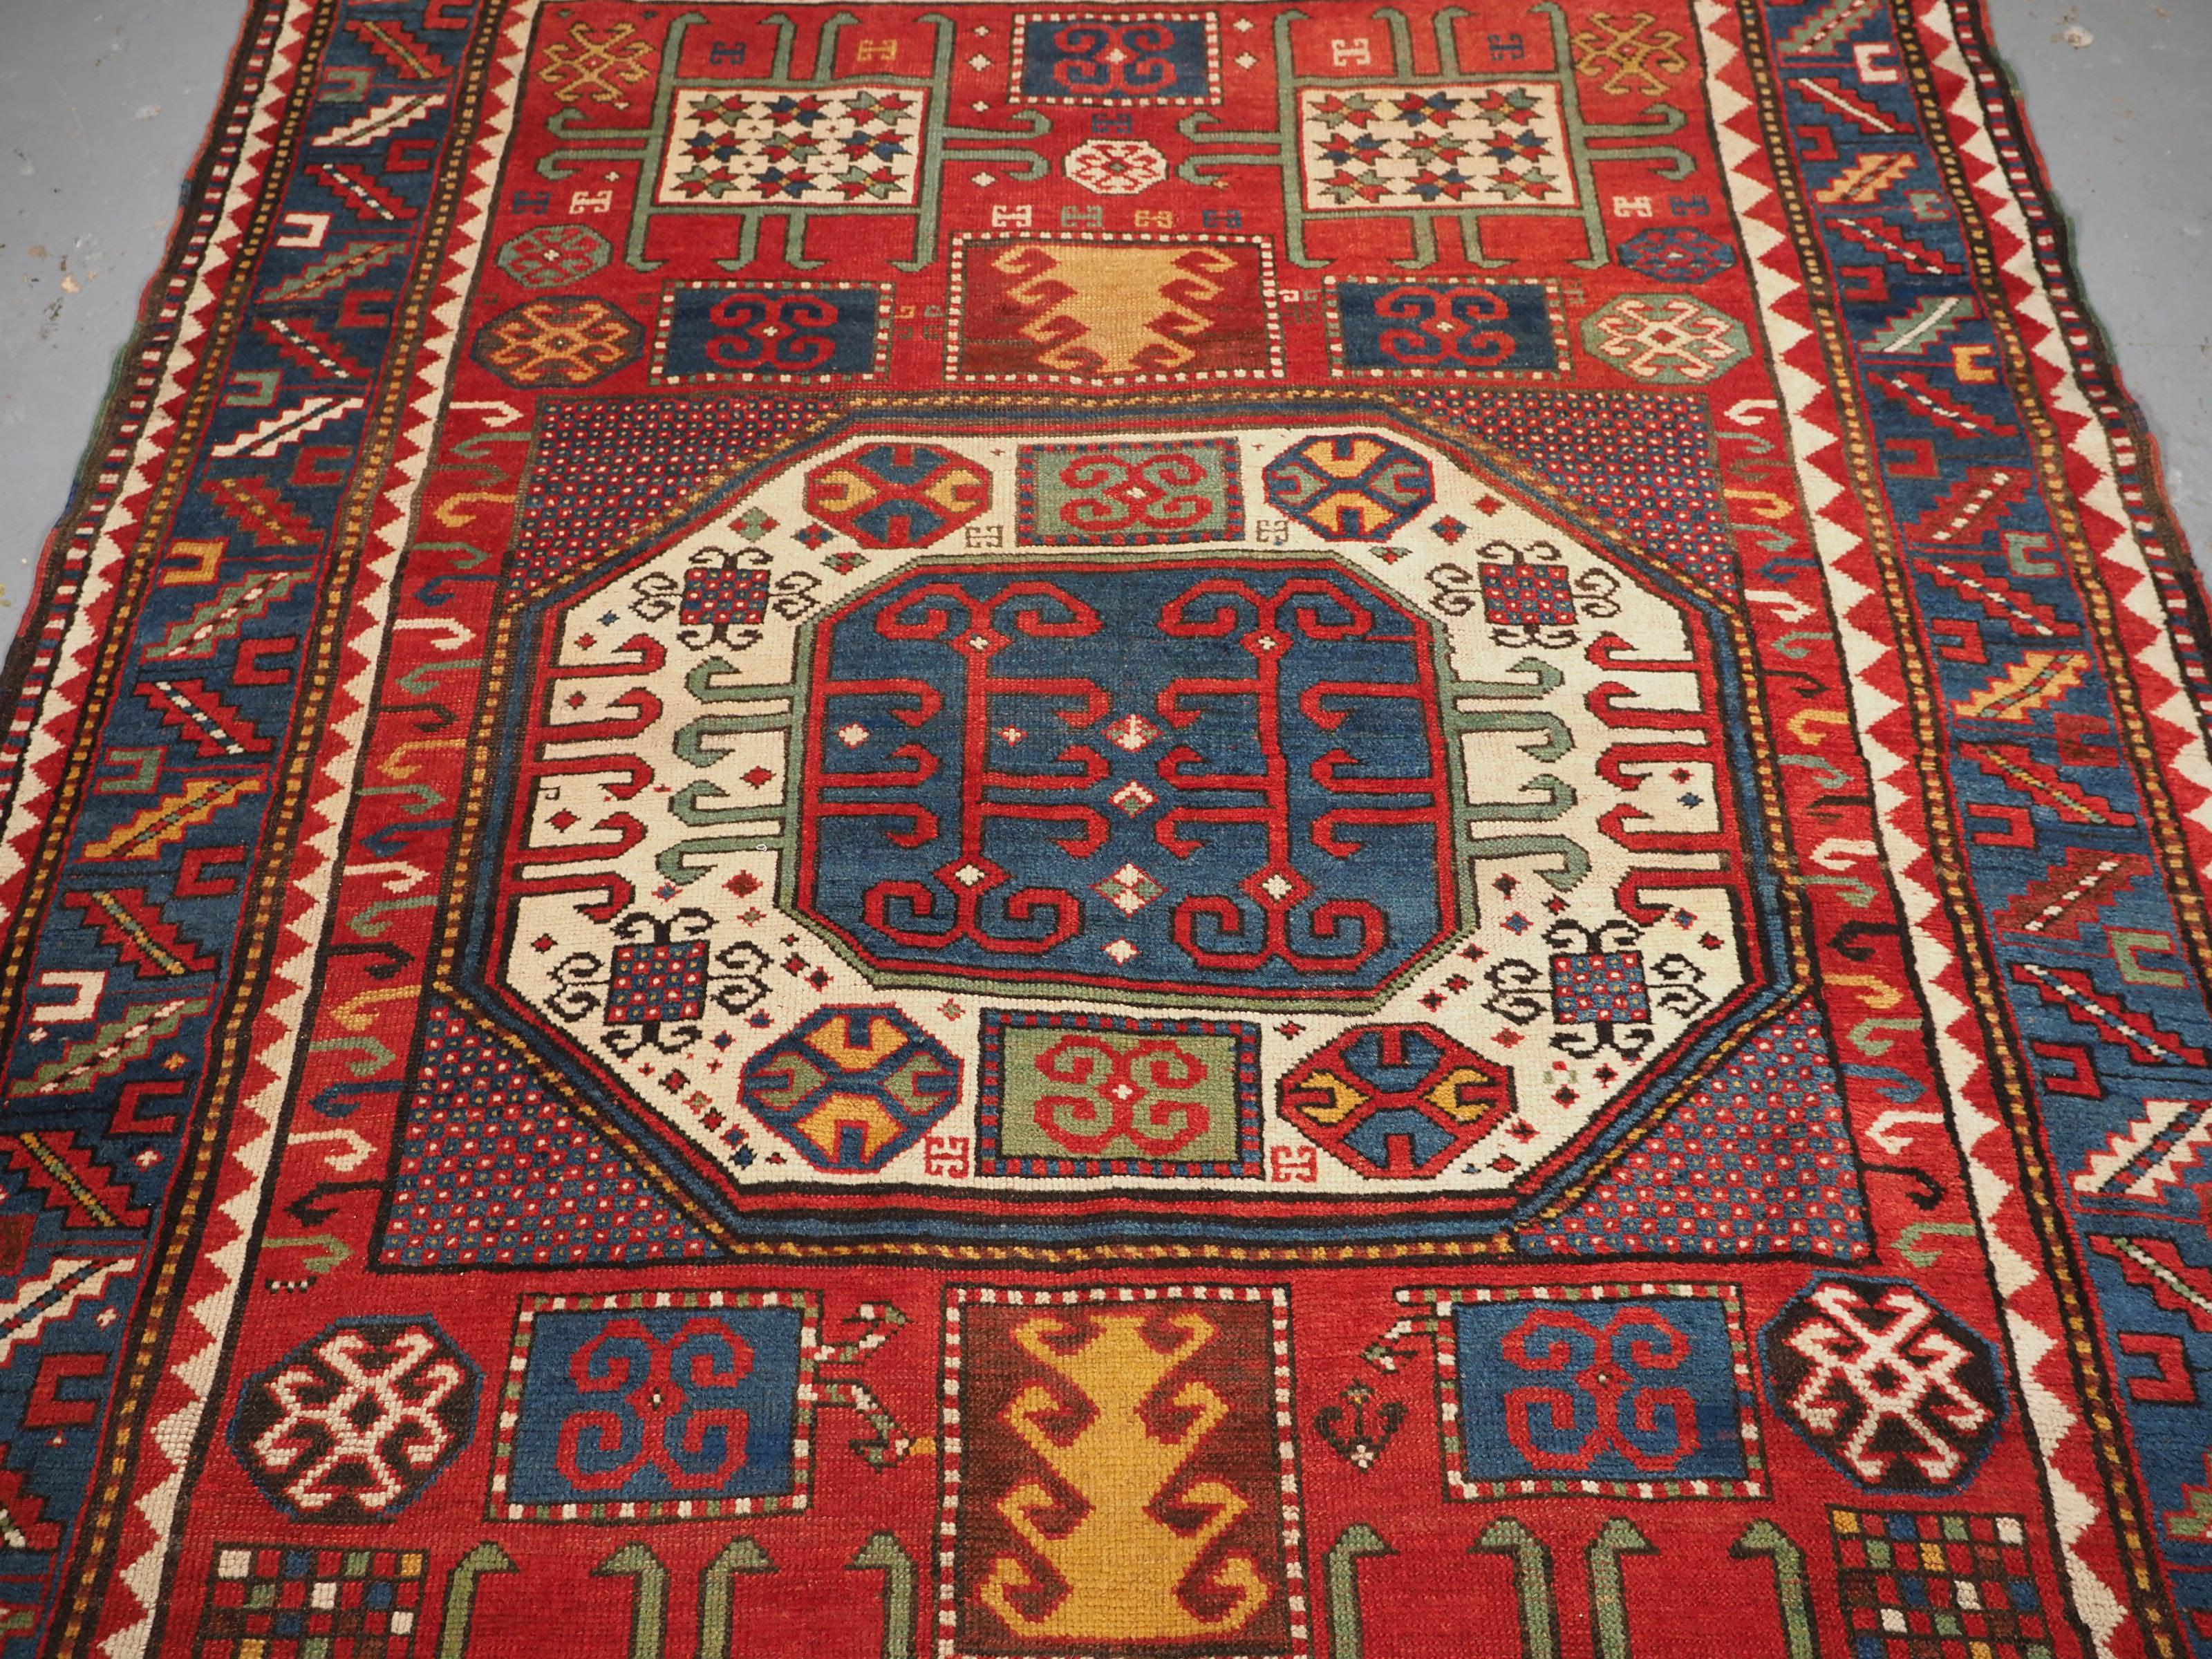 Georgian Antique Caucasian Karachov Kazak Rug of Classic Design on a Red Ground For Sale